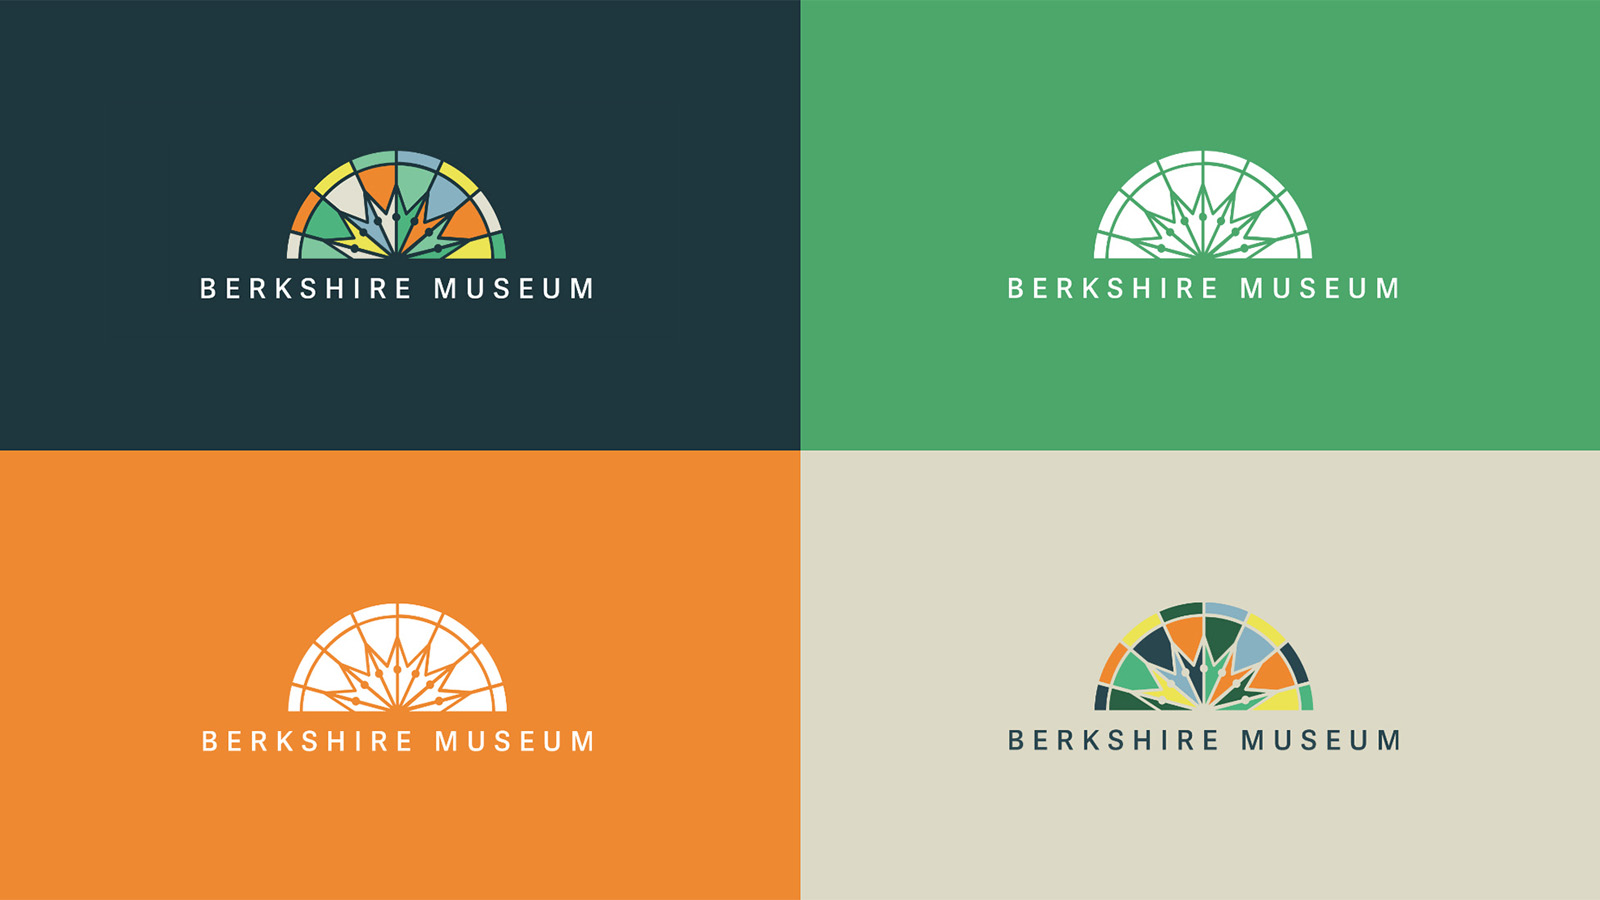 Final logo design for Berkshire Museum